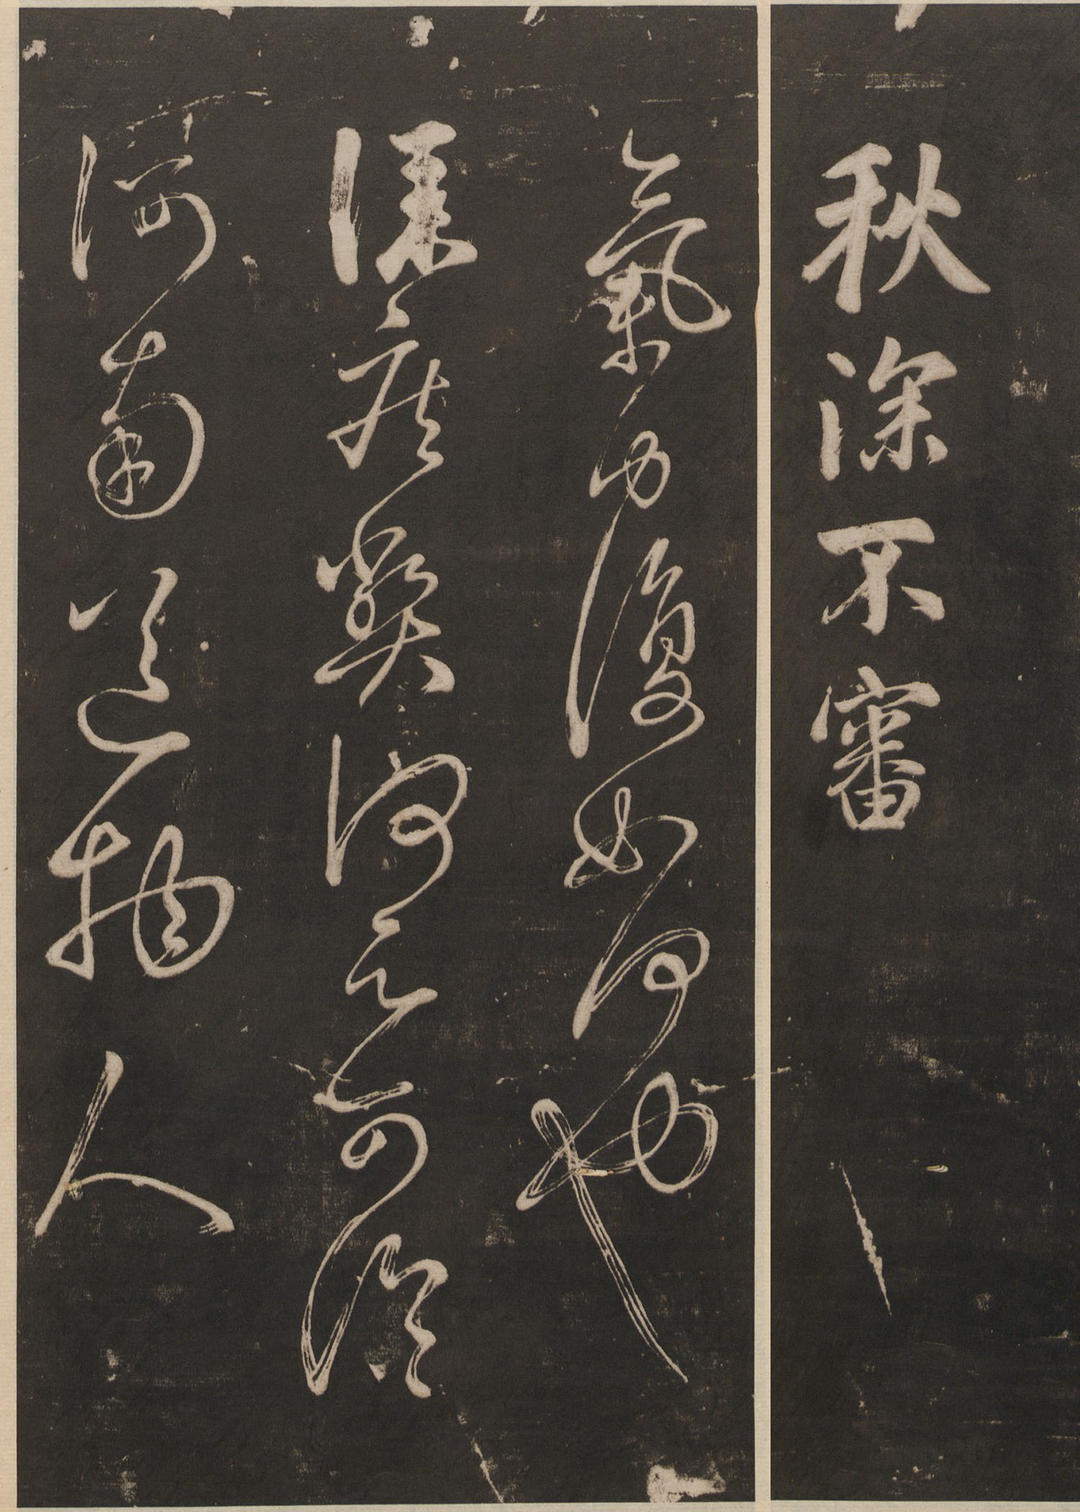 Zhang Xu (attributed), calligraphy